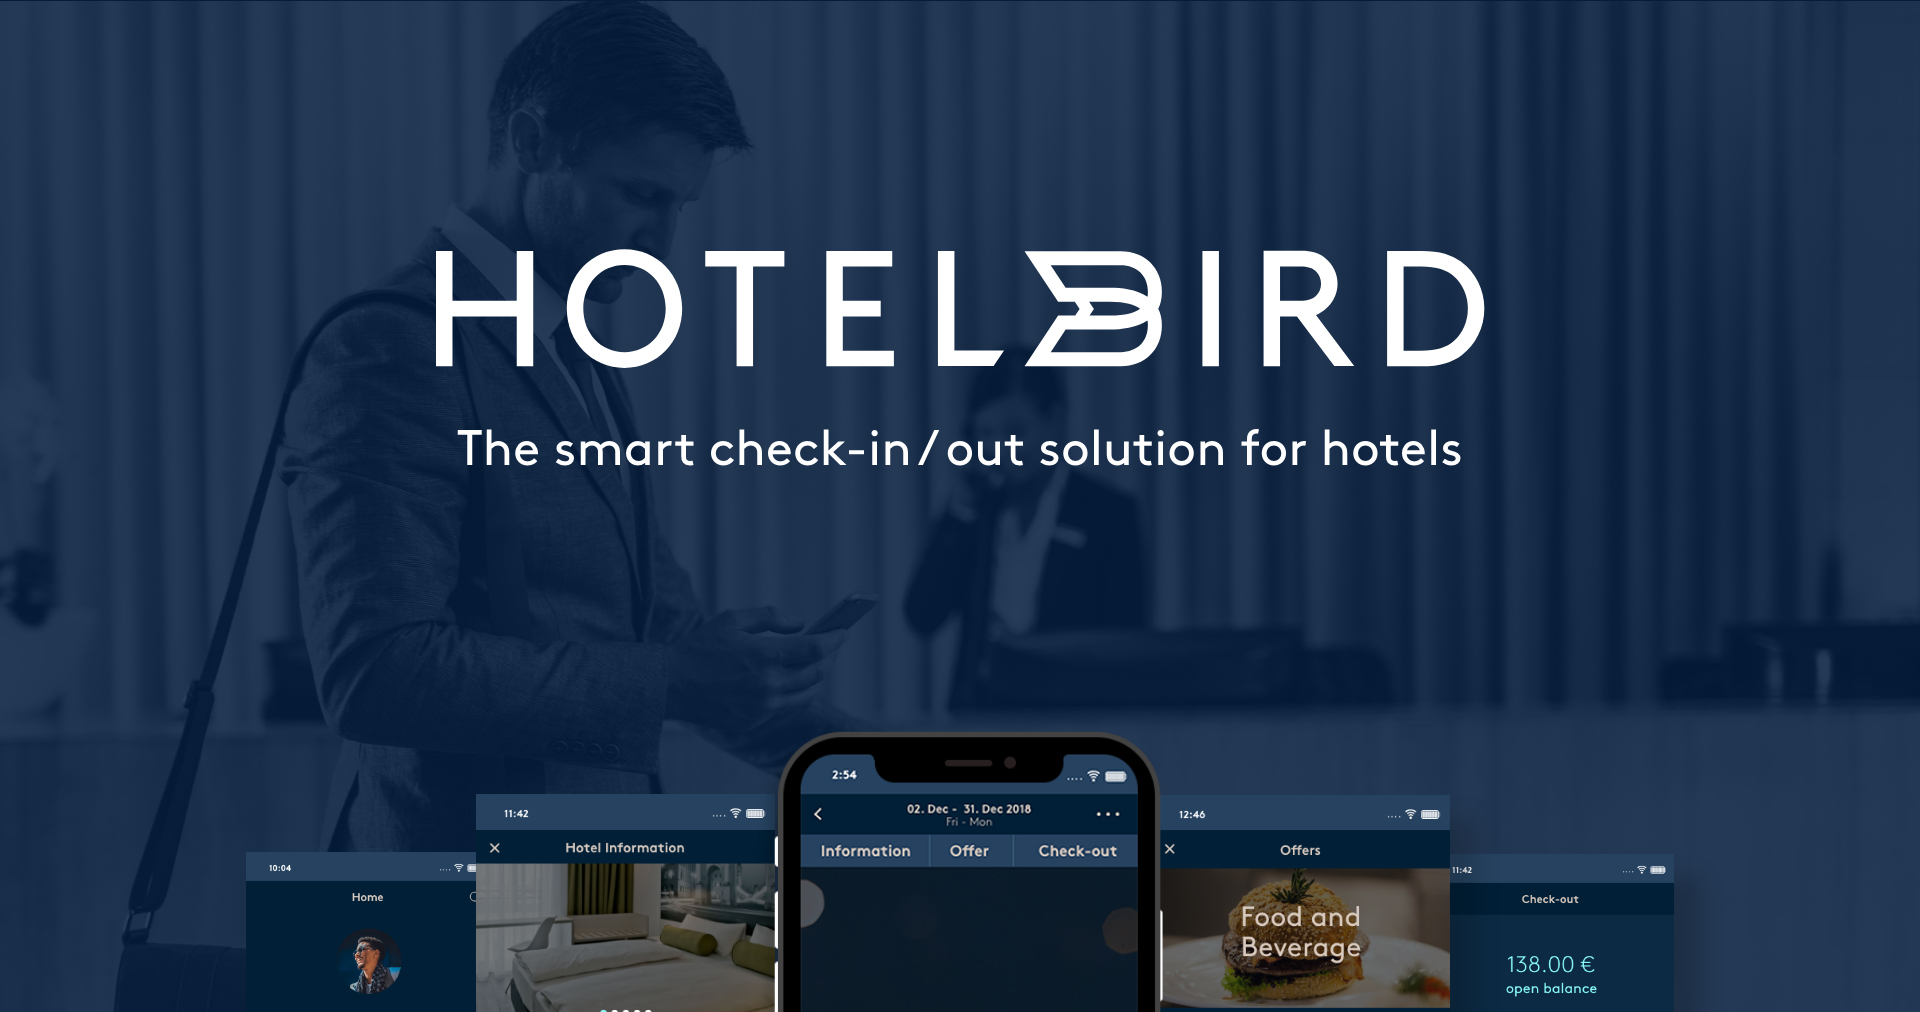 Hotelbird